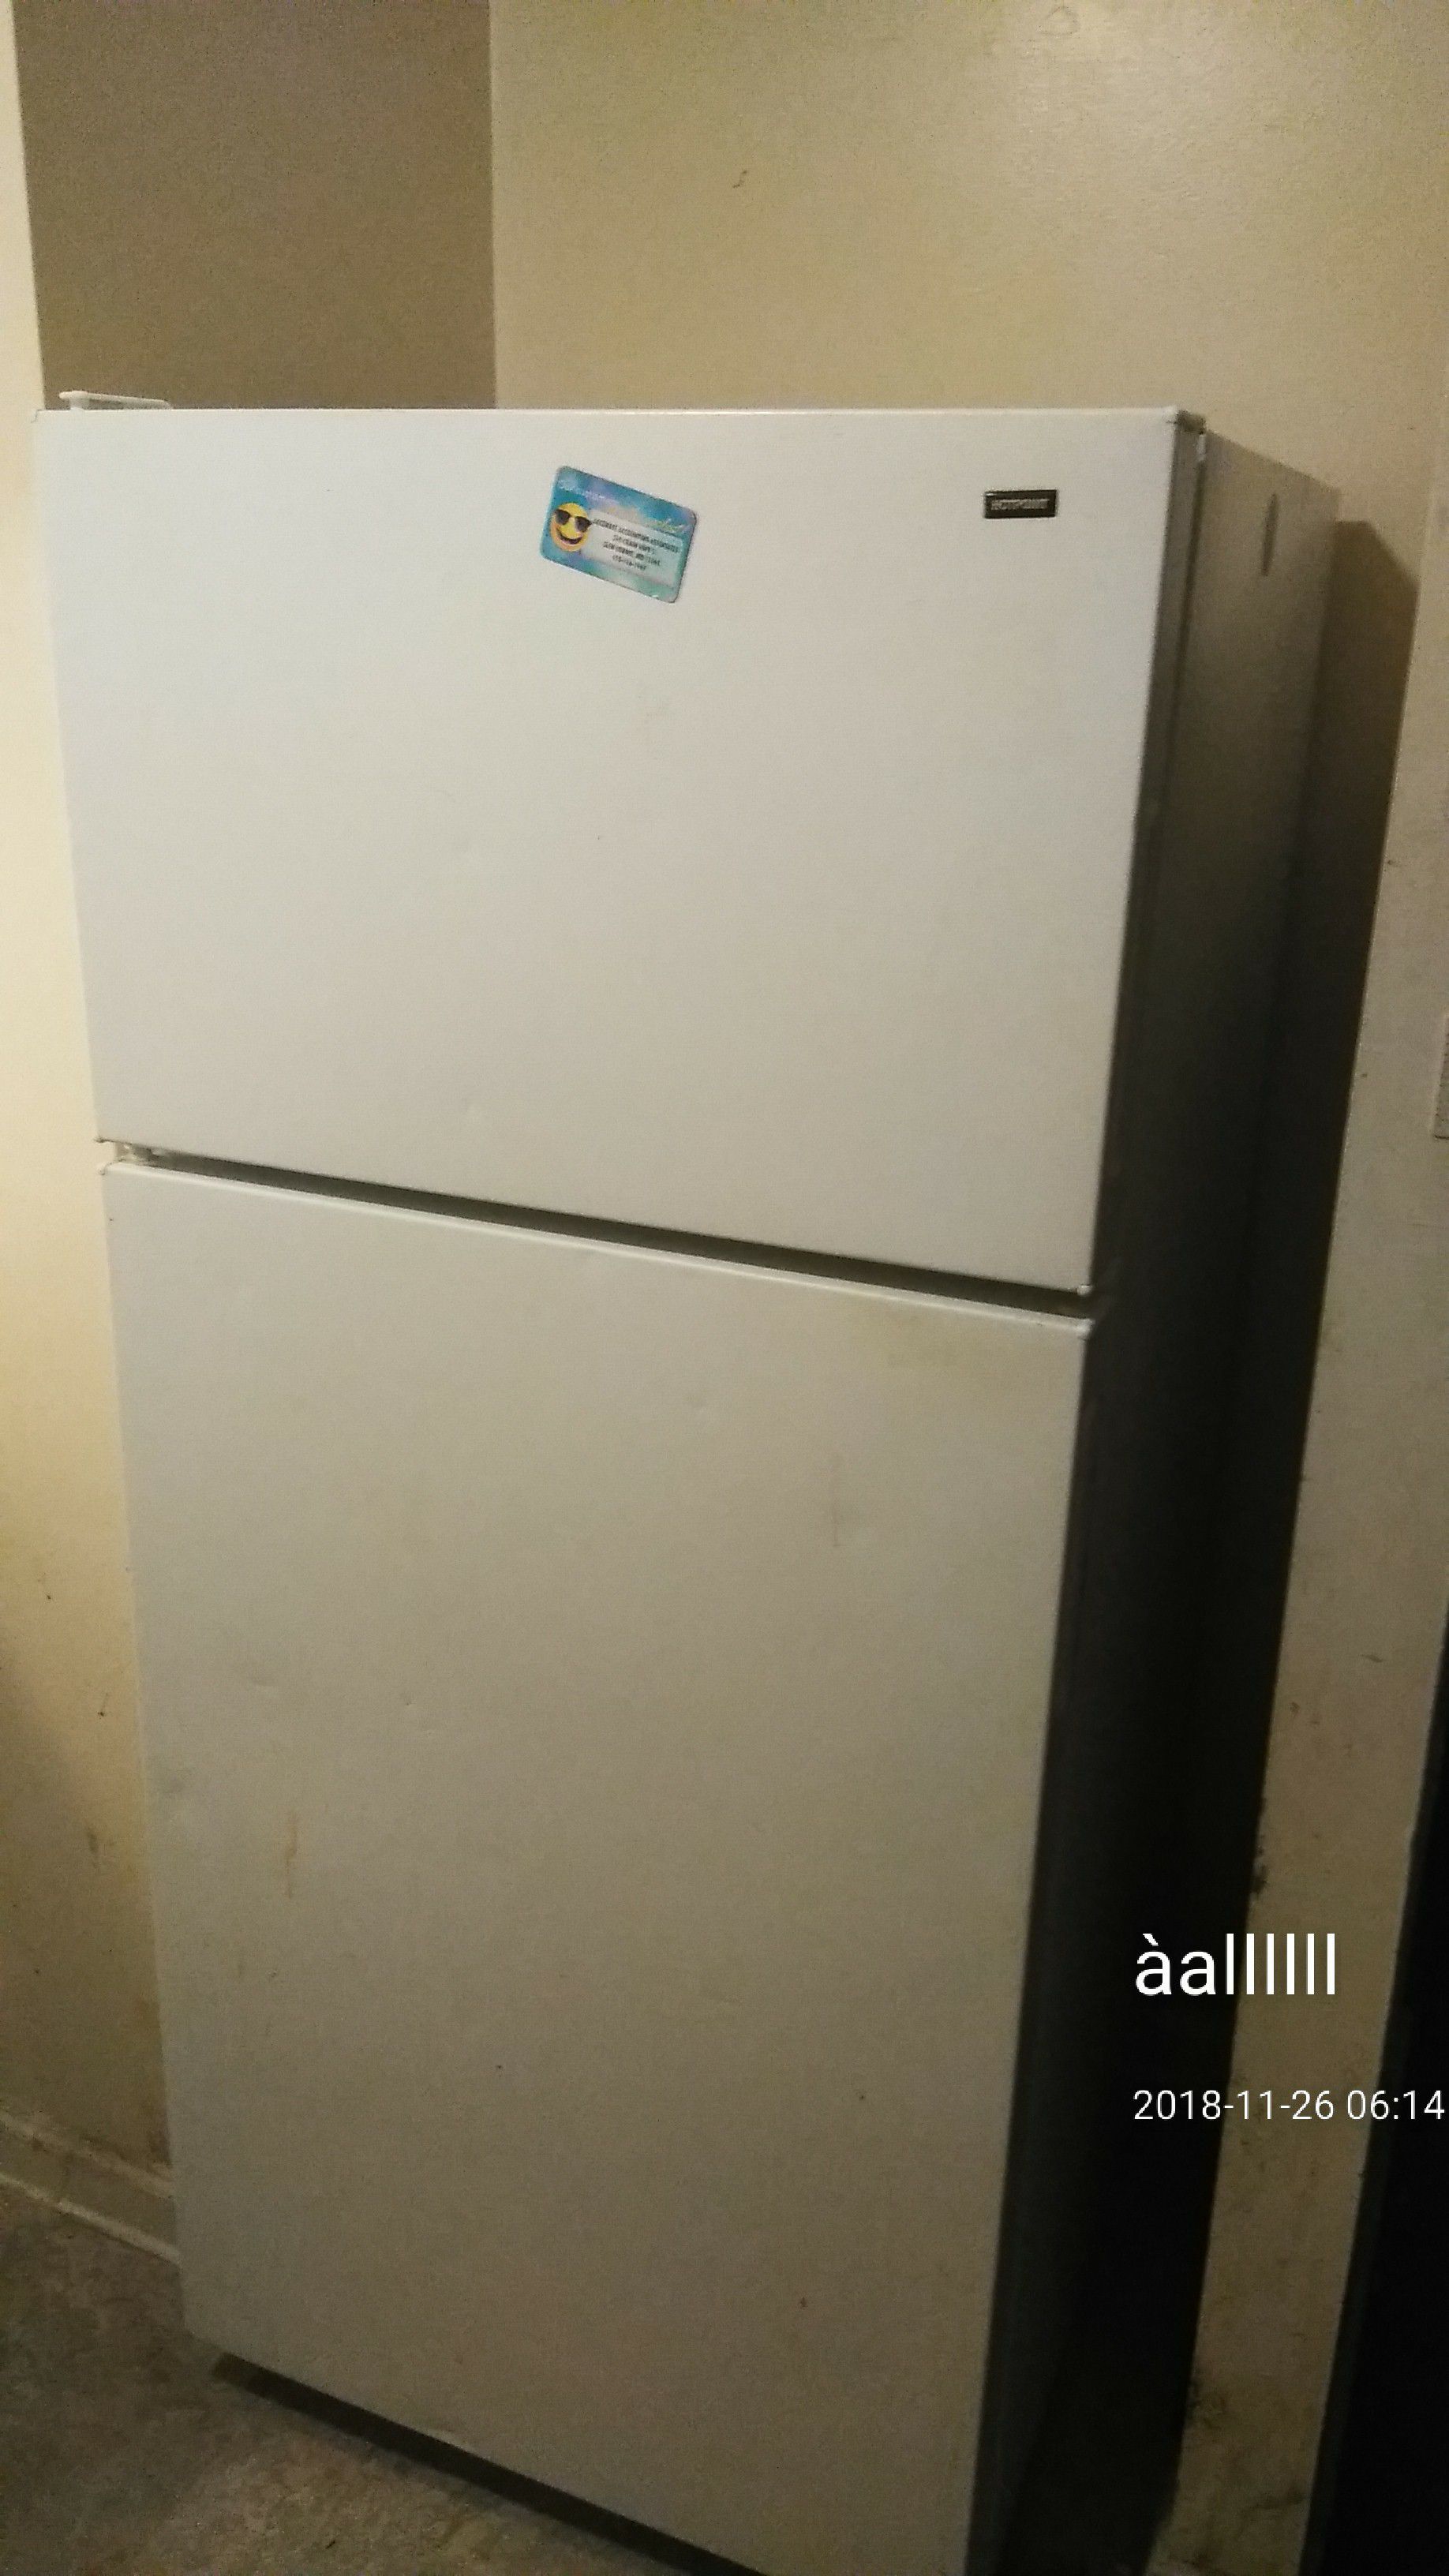 Nice clean refrigerator